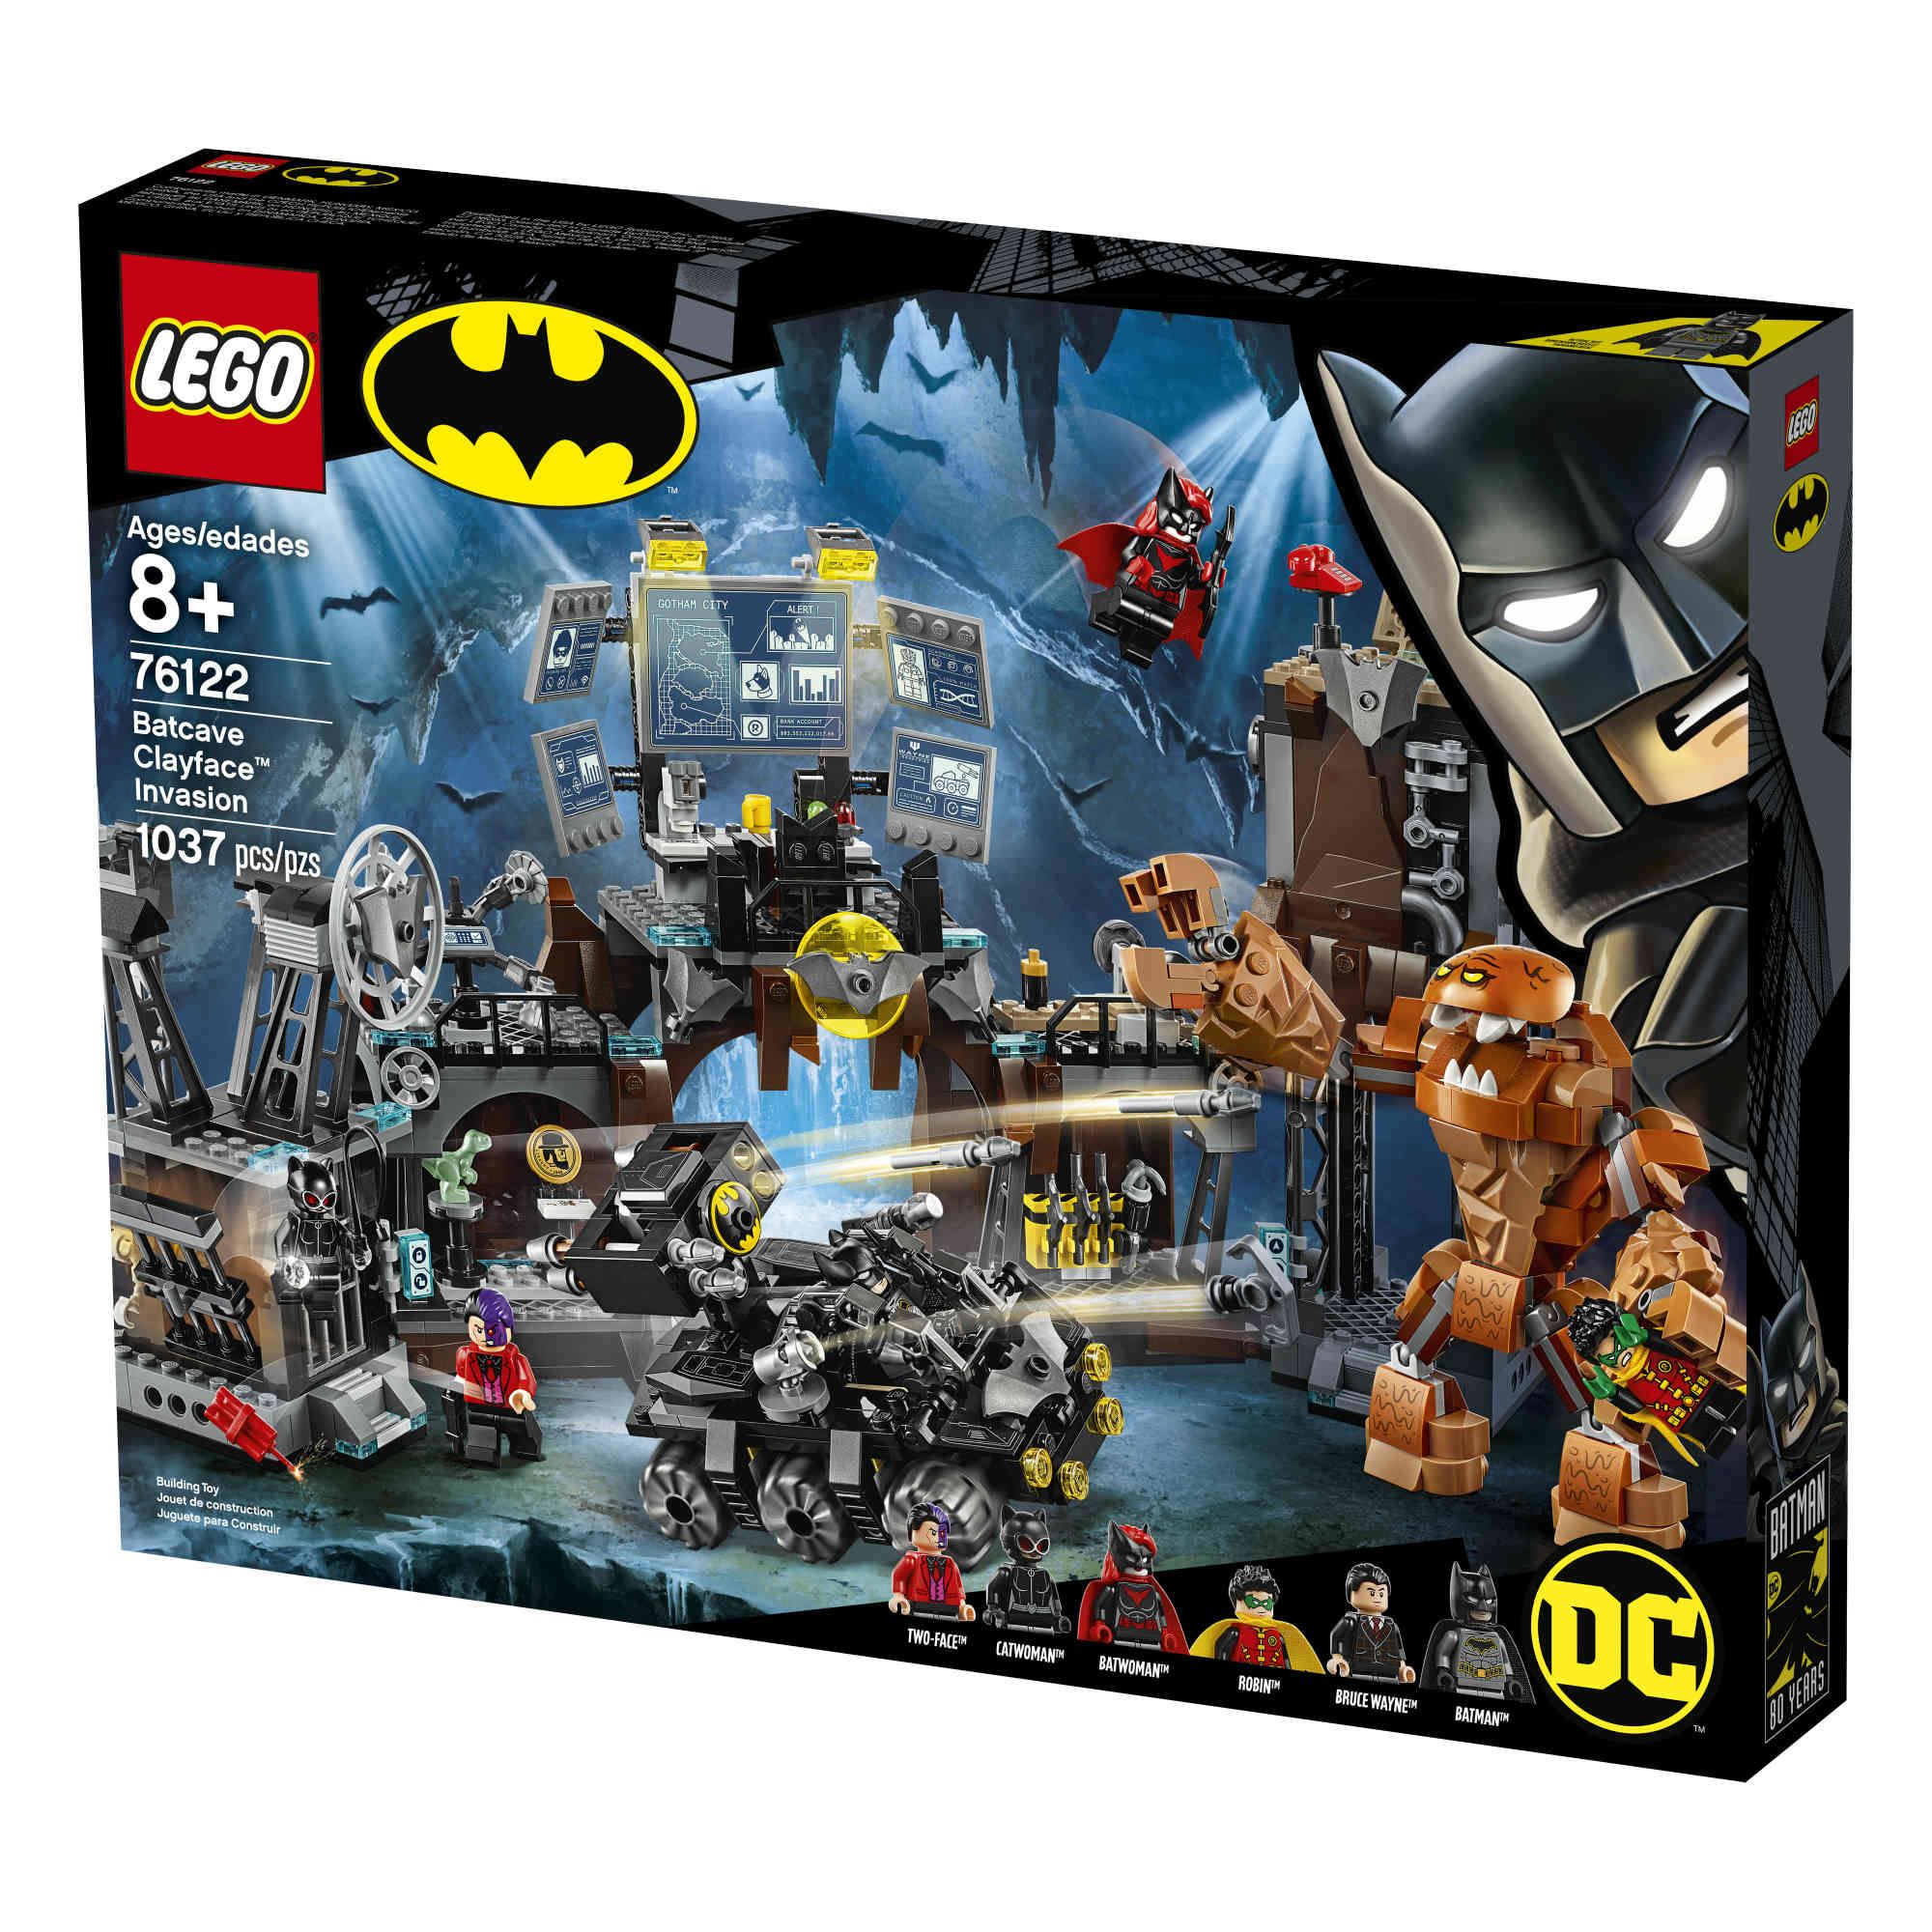 LEGO Batman Sets Unveiled in Celebration of Batmans 80th Anniversary